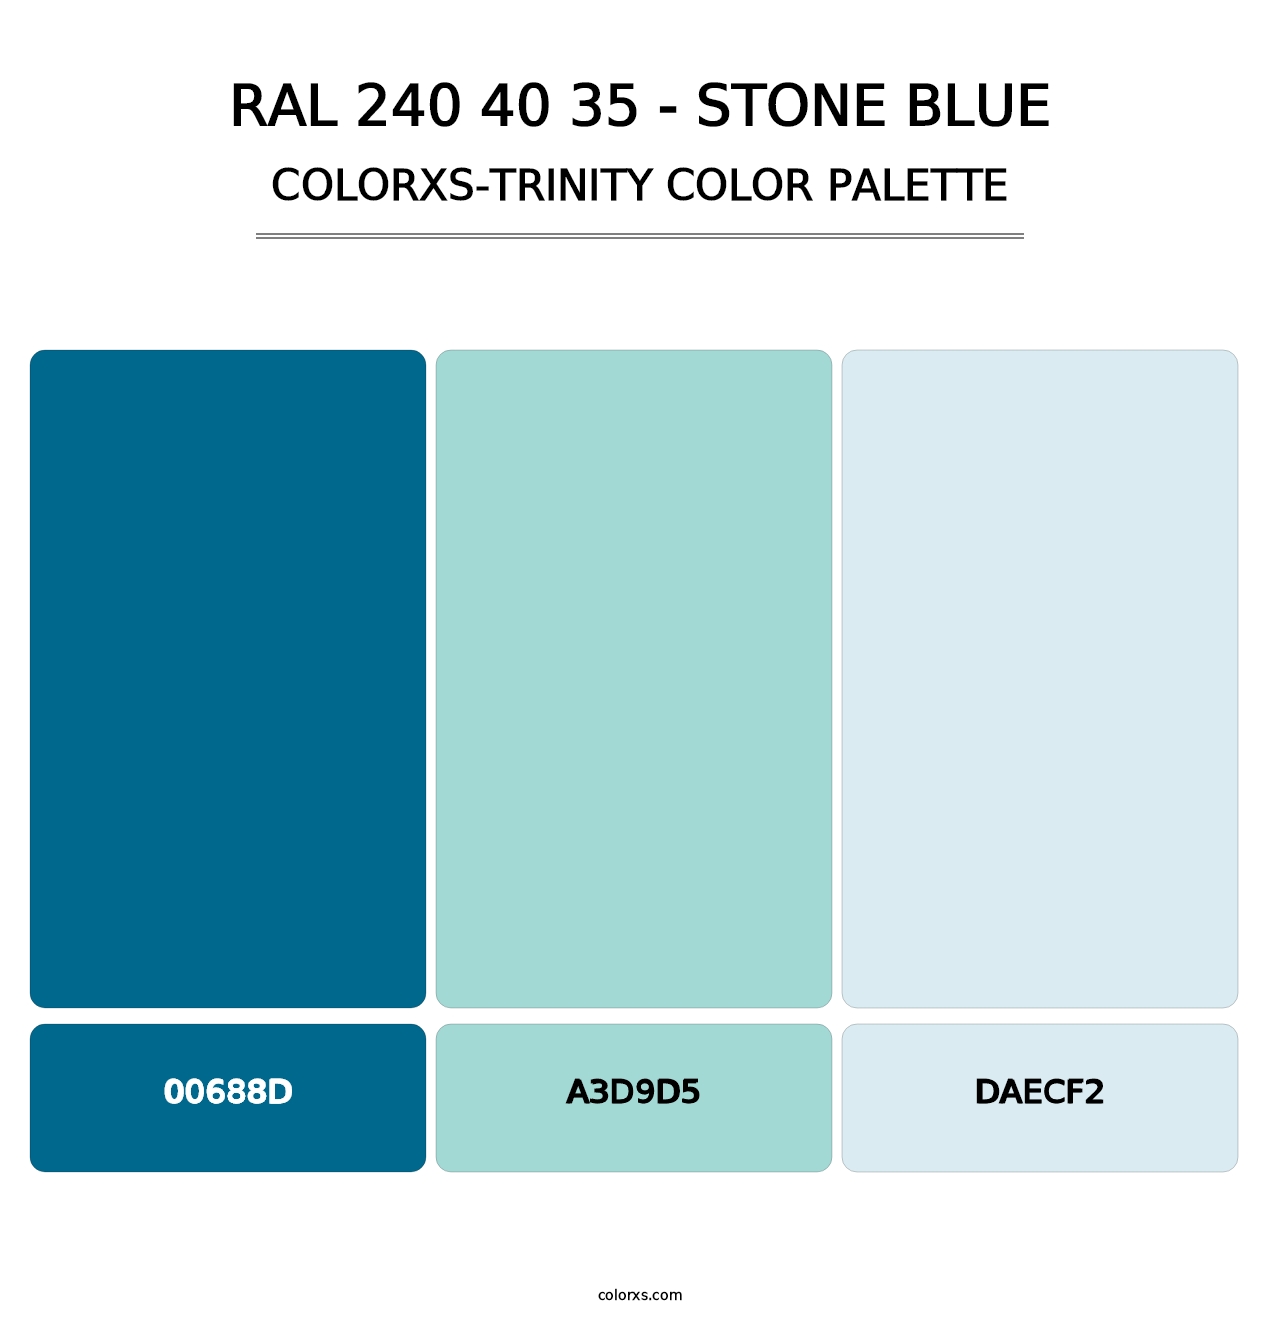 RAL 240 40 35 - Stone Blue - Colorxs Trinity Palette